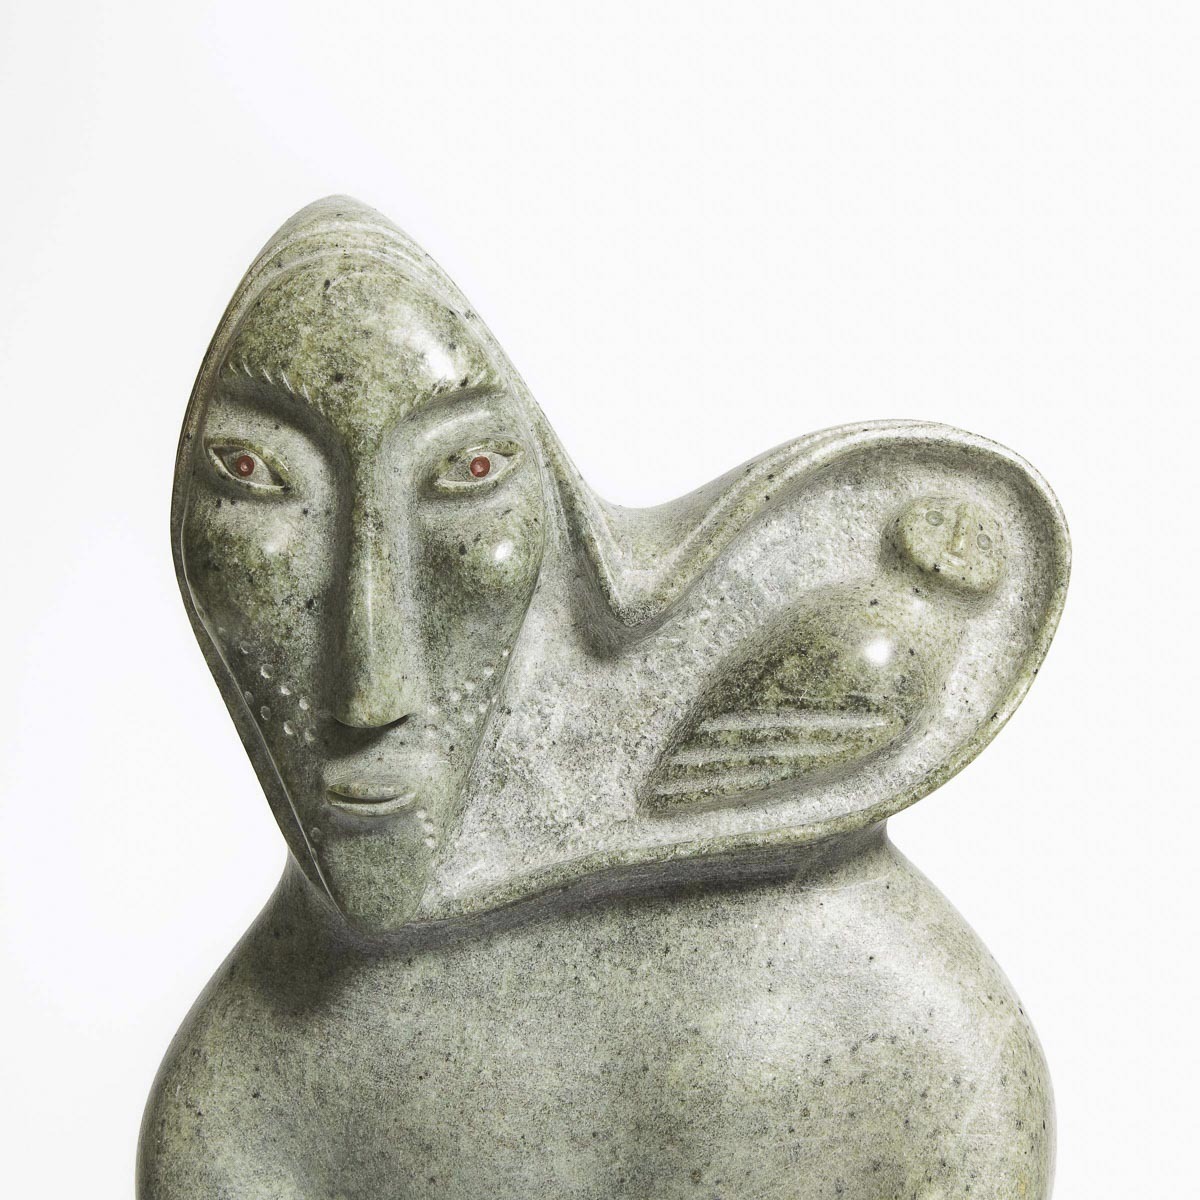 David Ruben Piqtoukun ᑎᕕᑎ ᐱᑐᑯ ᕈᐱᐃᓐ (b. 1950), WOMAN WITH OWL, 2011, stone, catlinite, 19.25 x 17.25 - Image 2 of 6